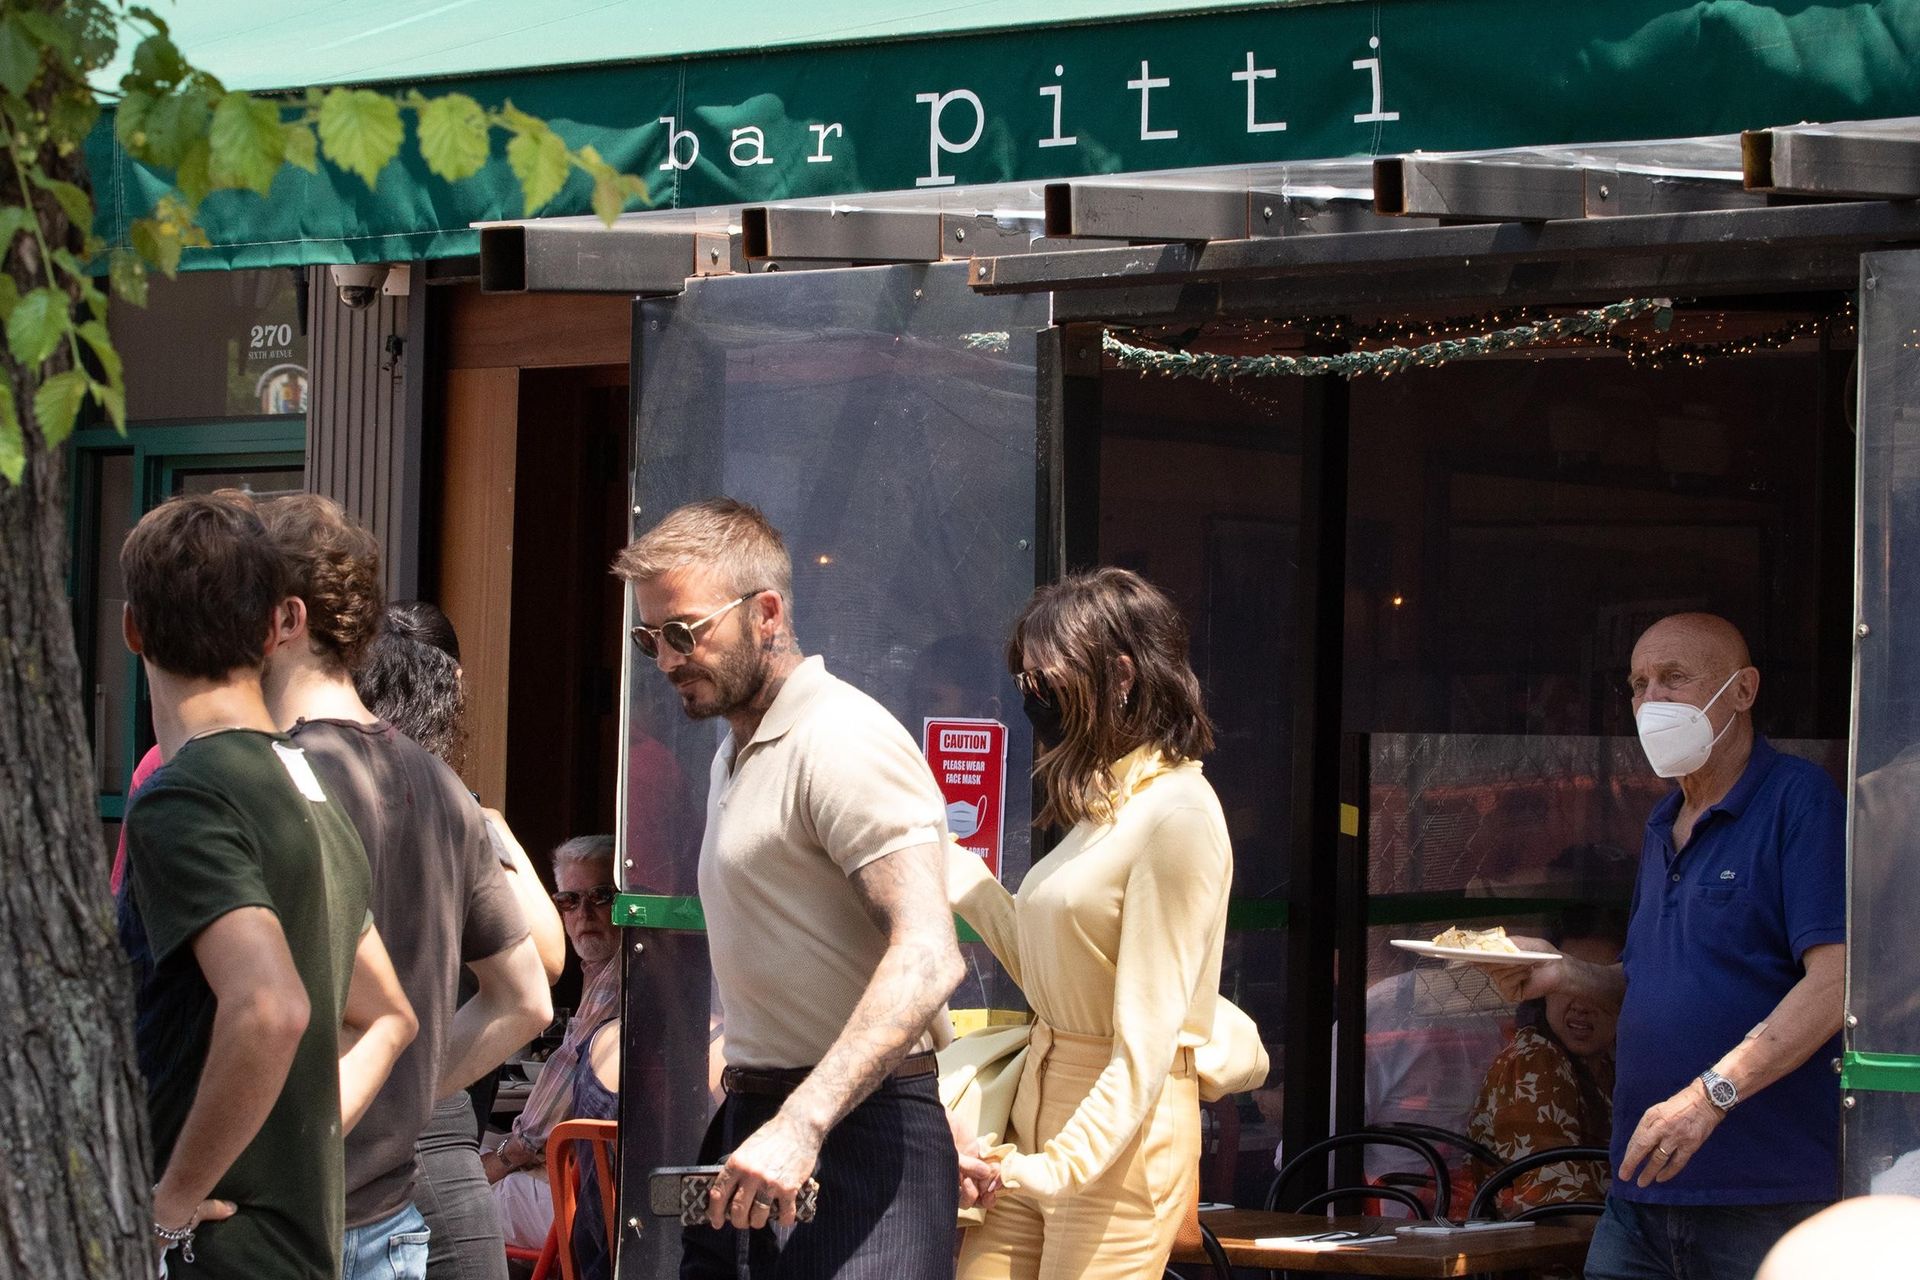 Victoria Beckham & David Beckham are Spotted Leaving Bar Pitti (54 Photos)